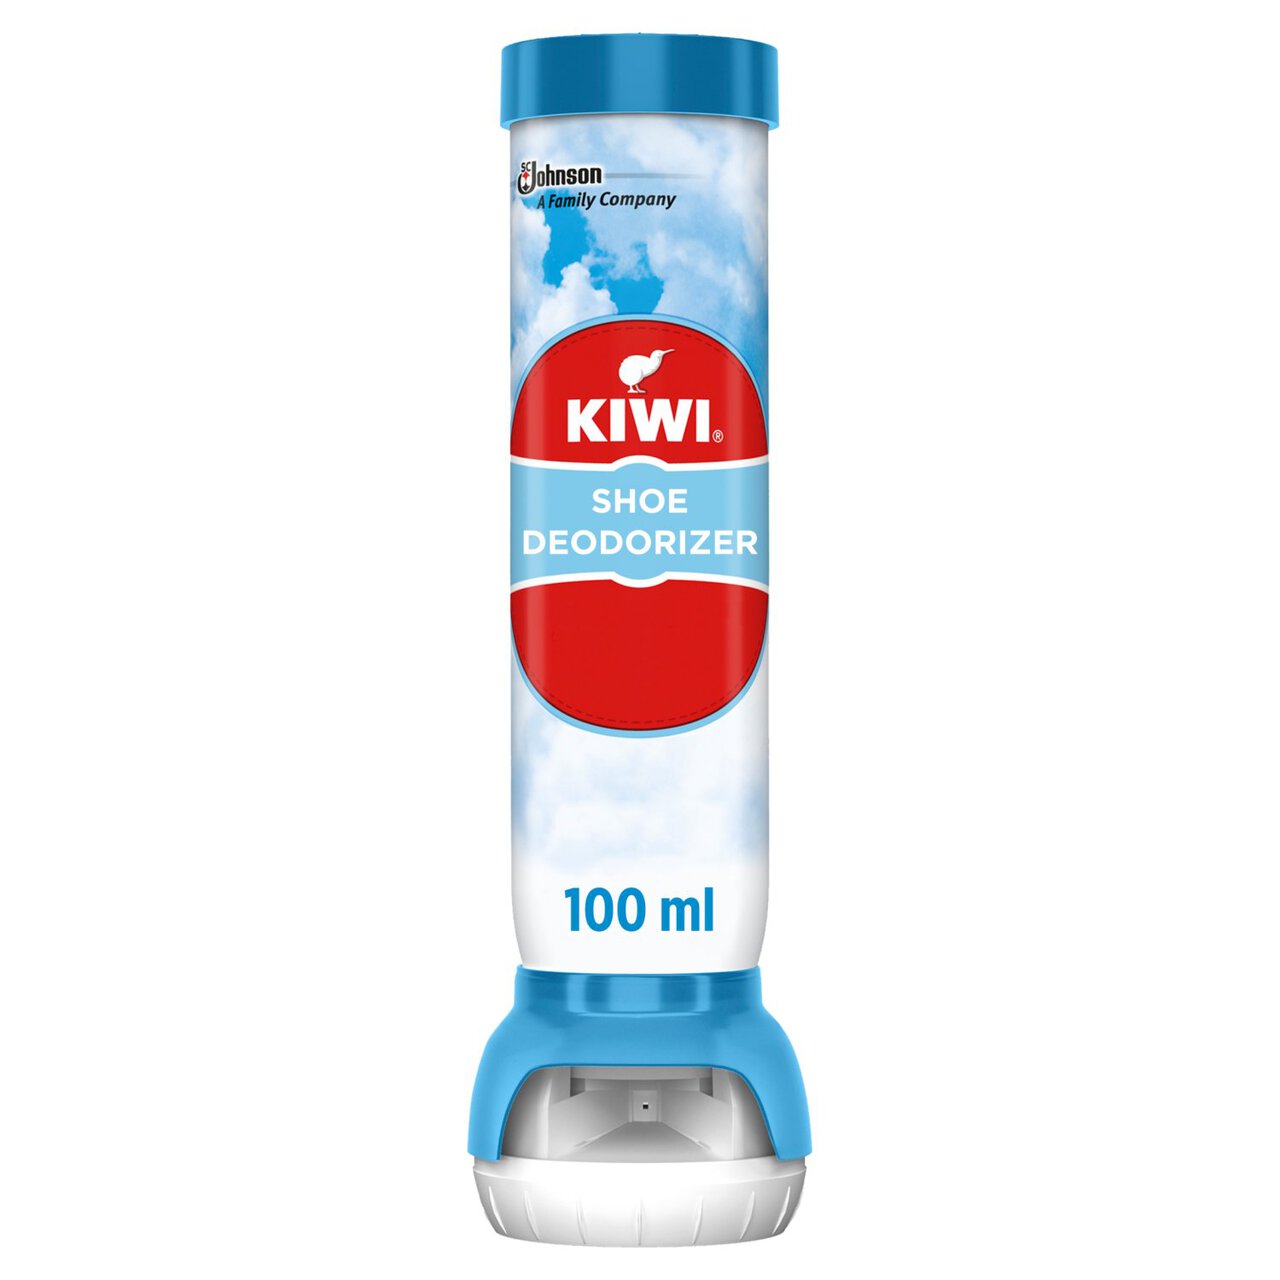 Kiwi Shoe Deo Fresh Clean Scent 100ml